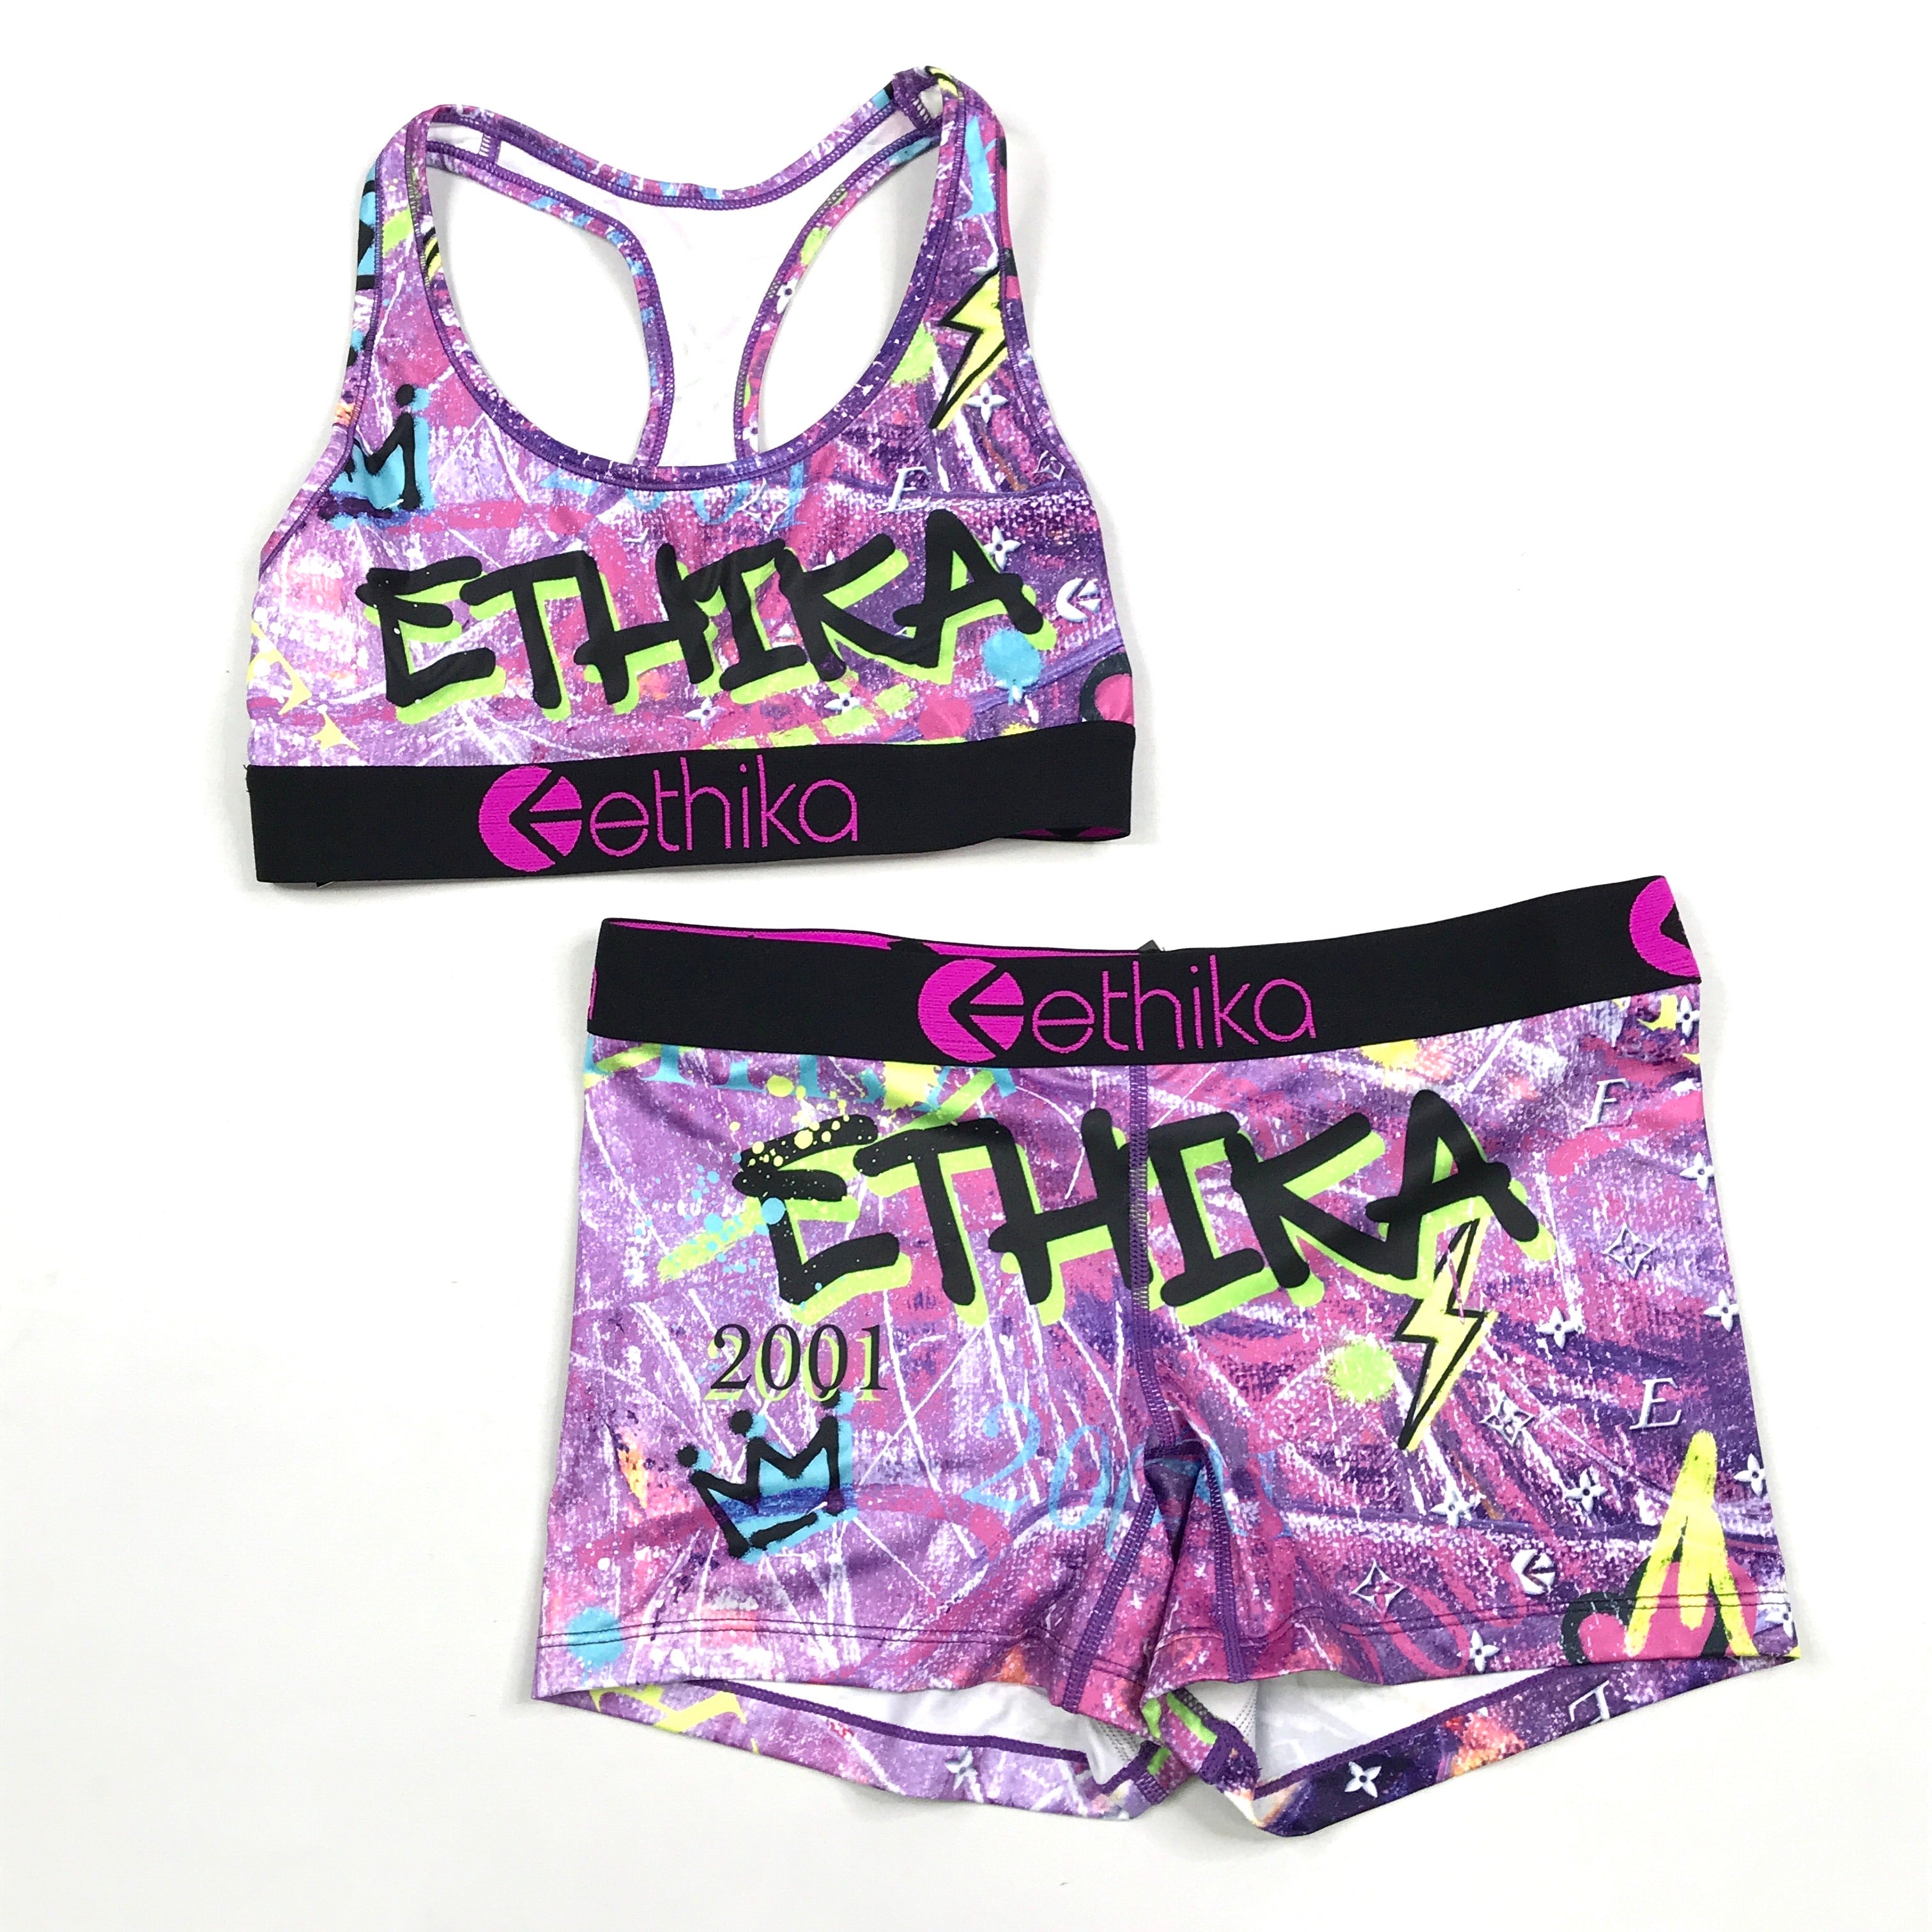 Ethika Staple boxer brief and sports bra set in Lady Graffiti (wlus152 –  R.O.K. Island Clothing